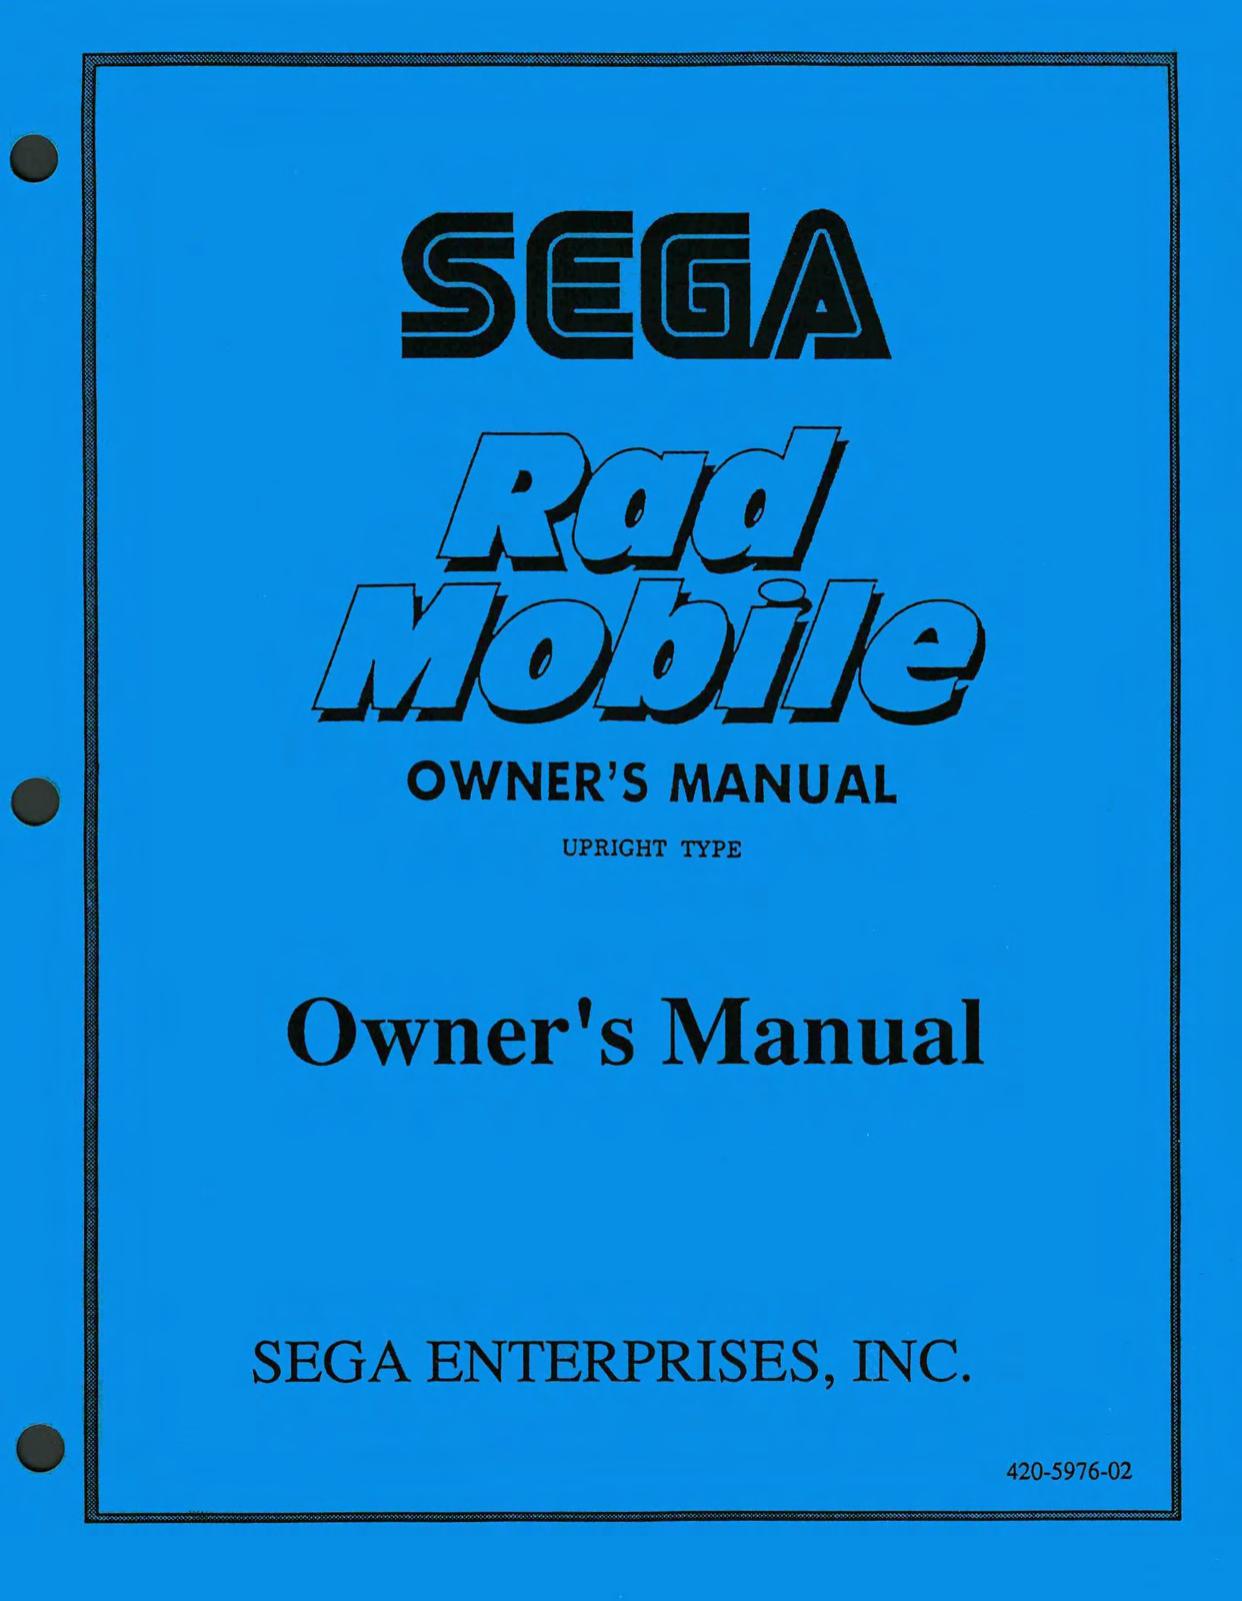 Rad Mobile Sega Upright Type Owners Manual (420-55976-02)